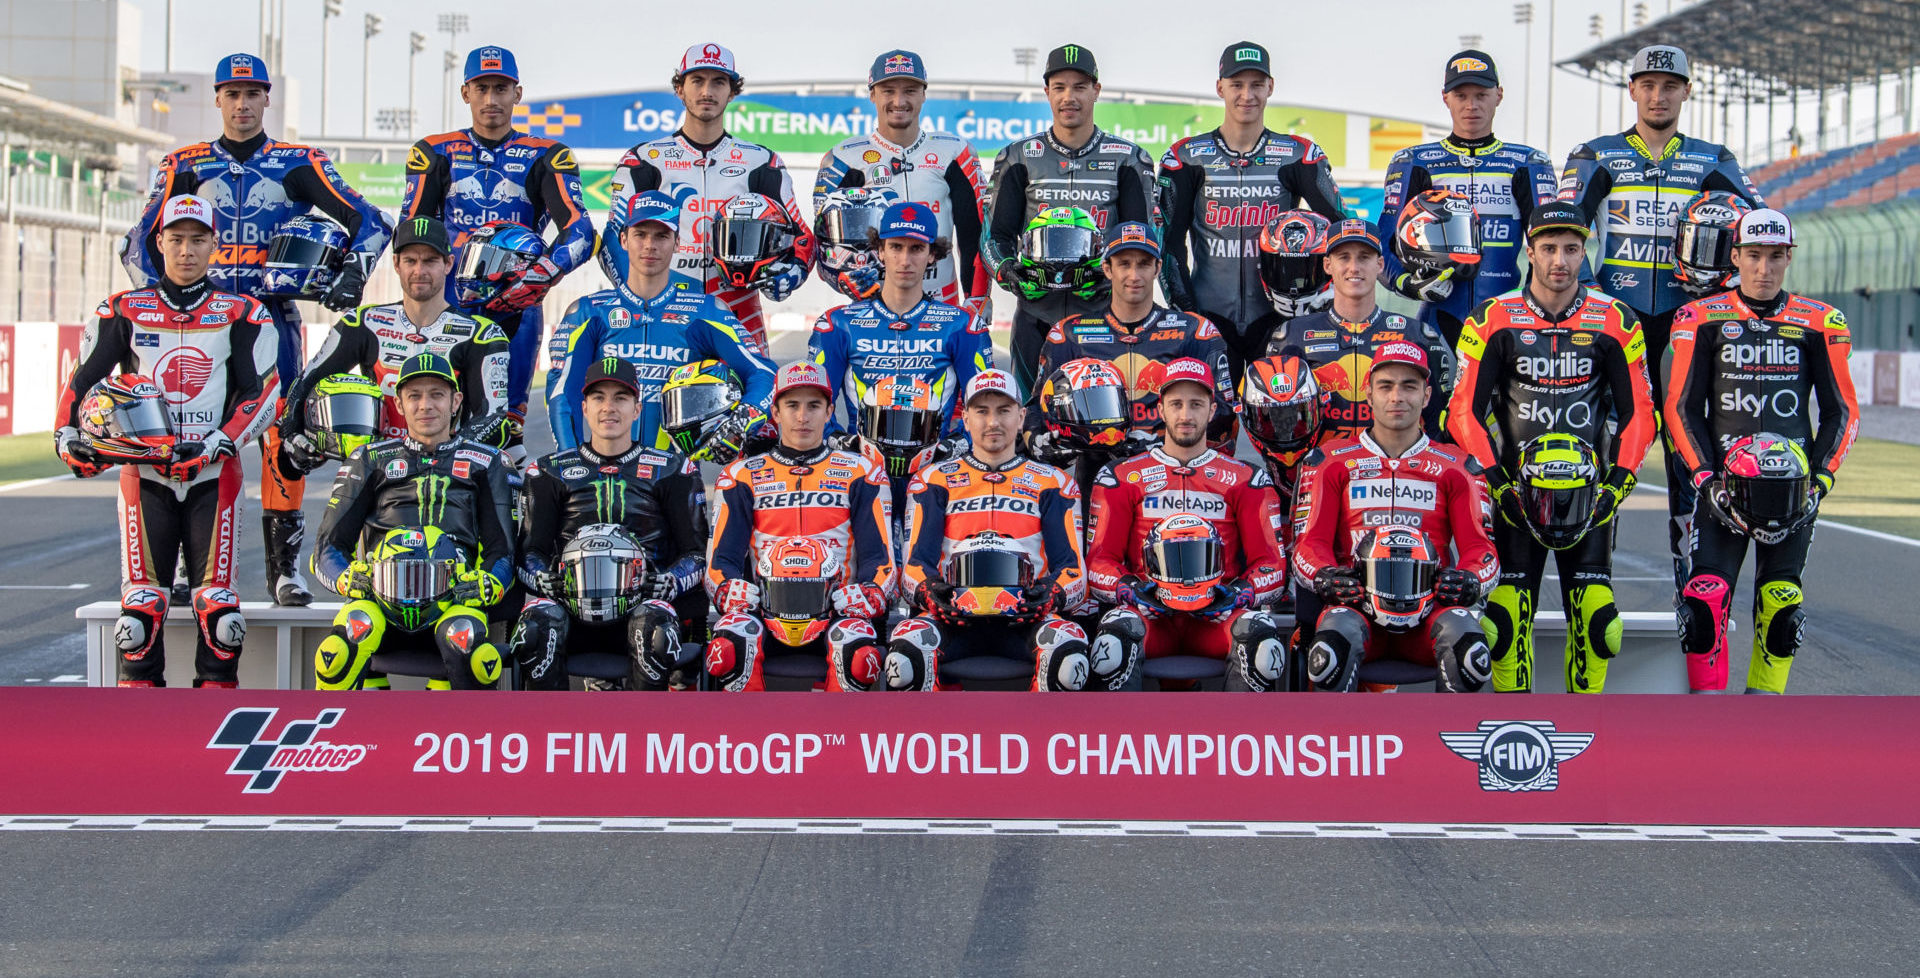 The 2019 FIM MotoGP World Championship field. Photo courtesy of Dorna.